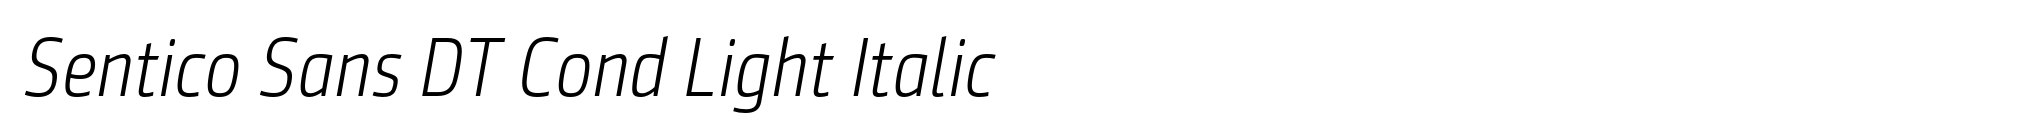 Sentico Sans DT Cond Light Italic image